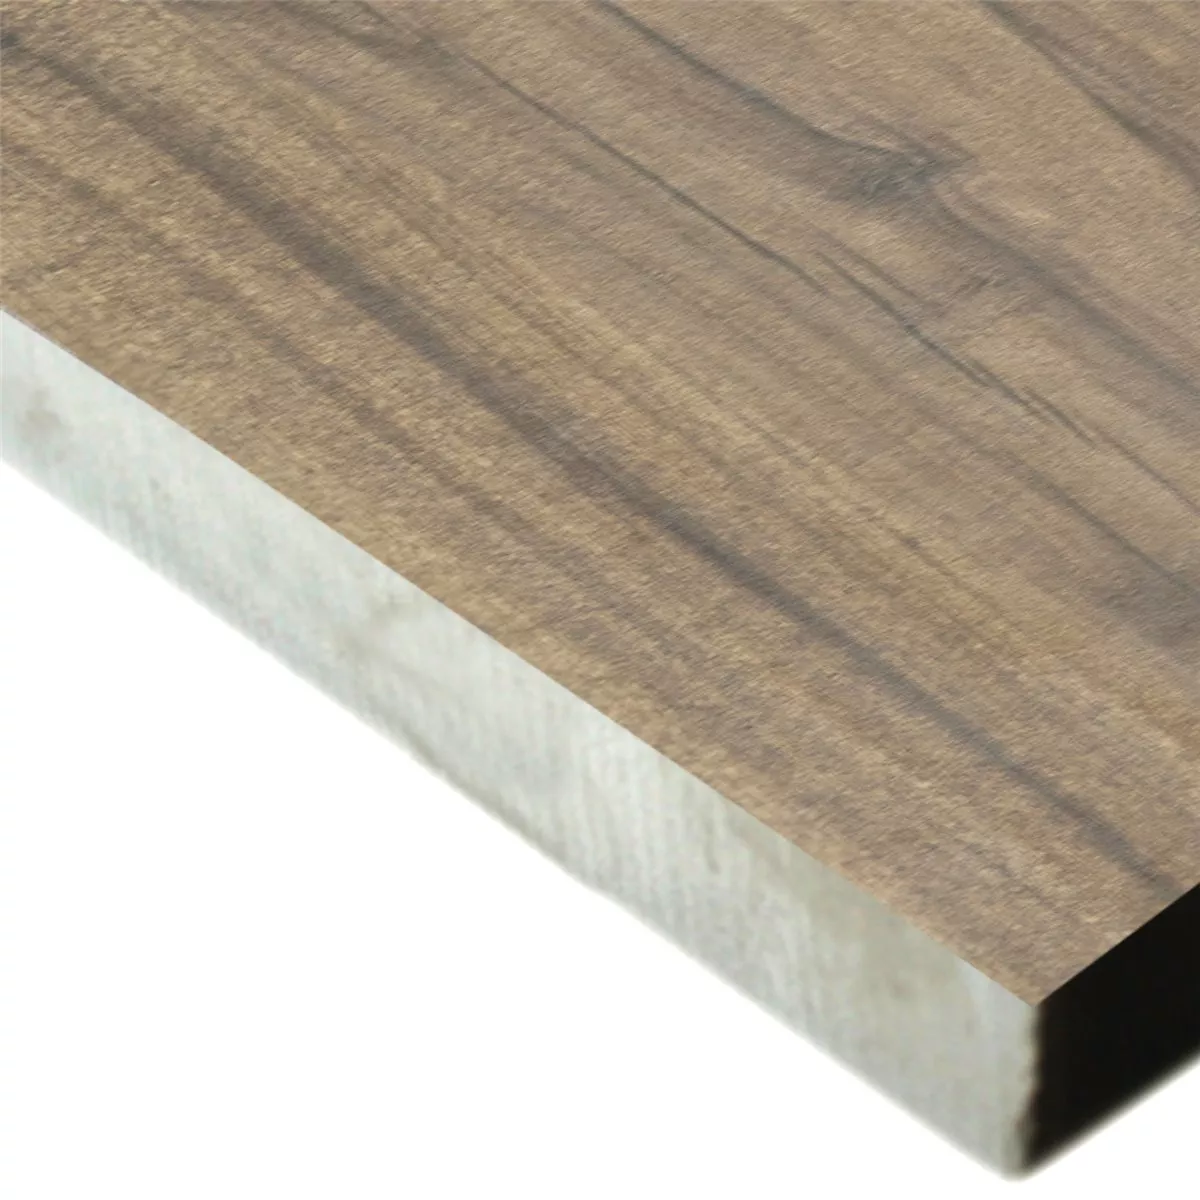 Sample Terrace Tiles in Wood Optic Emparrado Brown 40x80cm